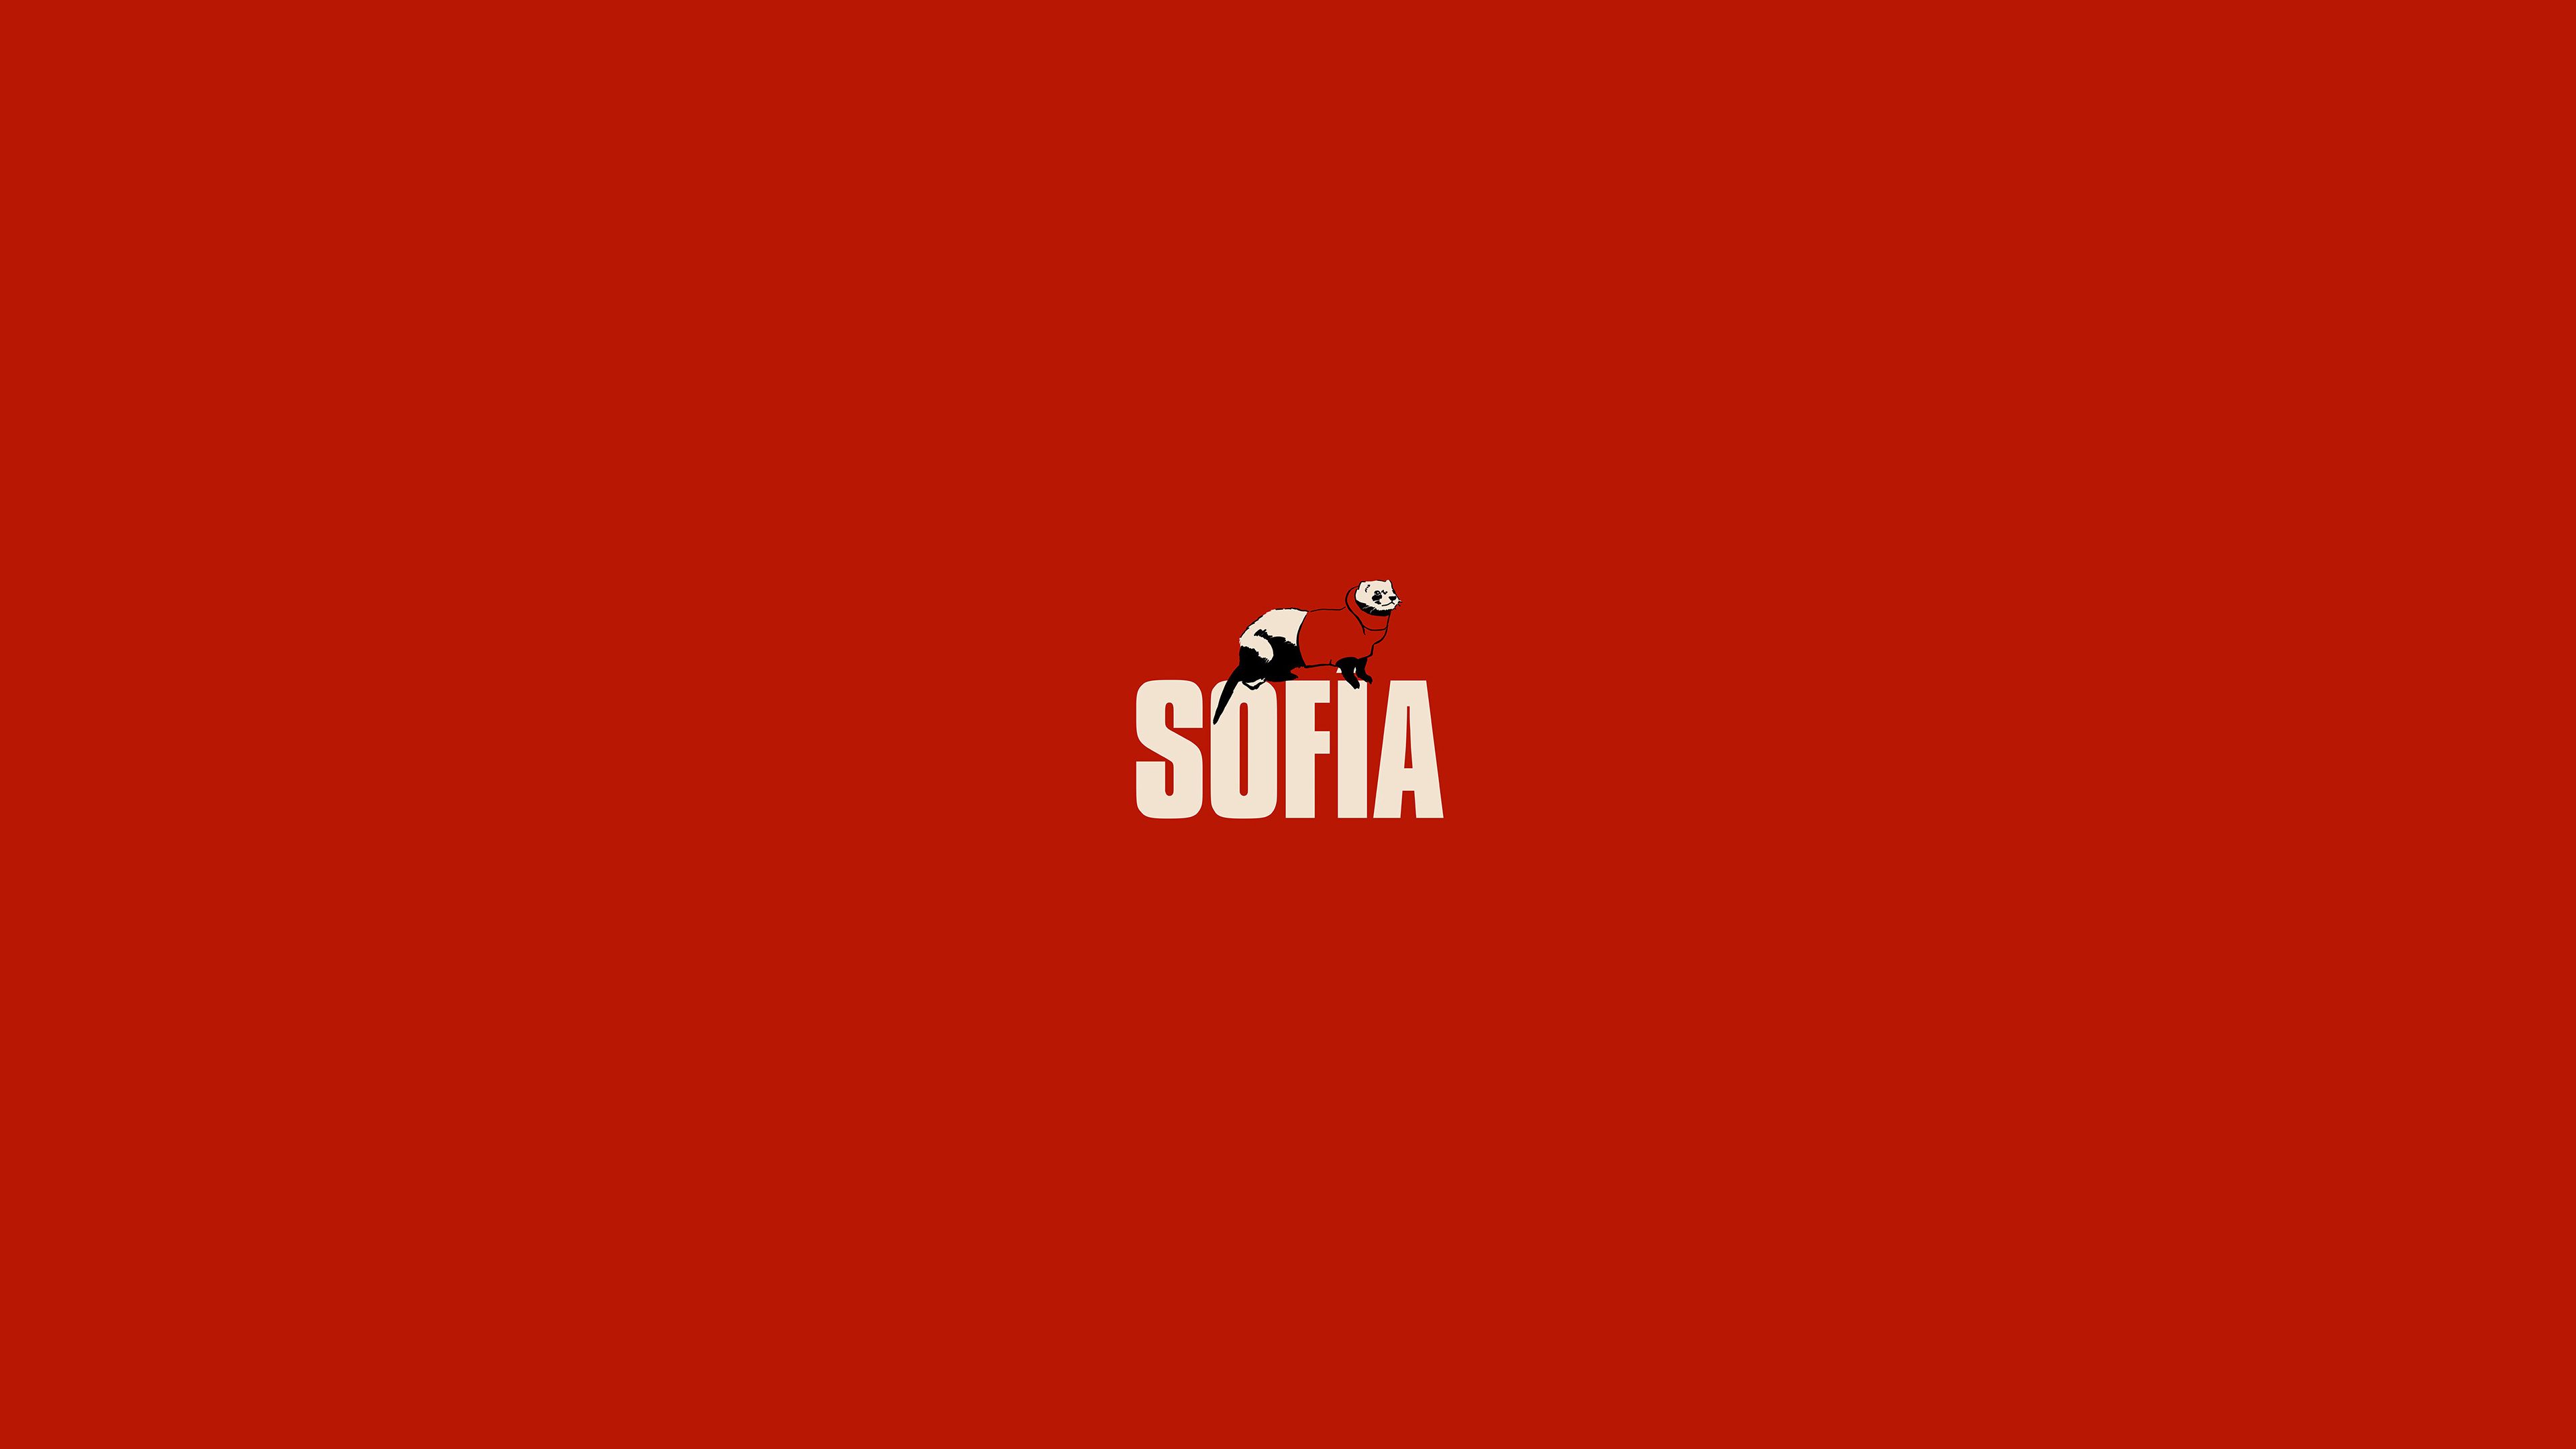 Sofia Money Heist 1080P Laptop Full HD Wallpaper, HD Minimalist 4K Wallpaper, Image, Photo and Background